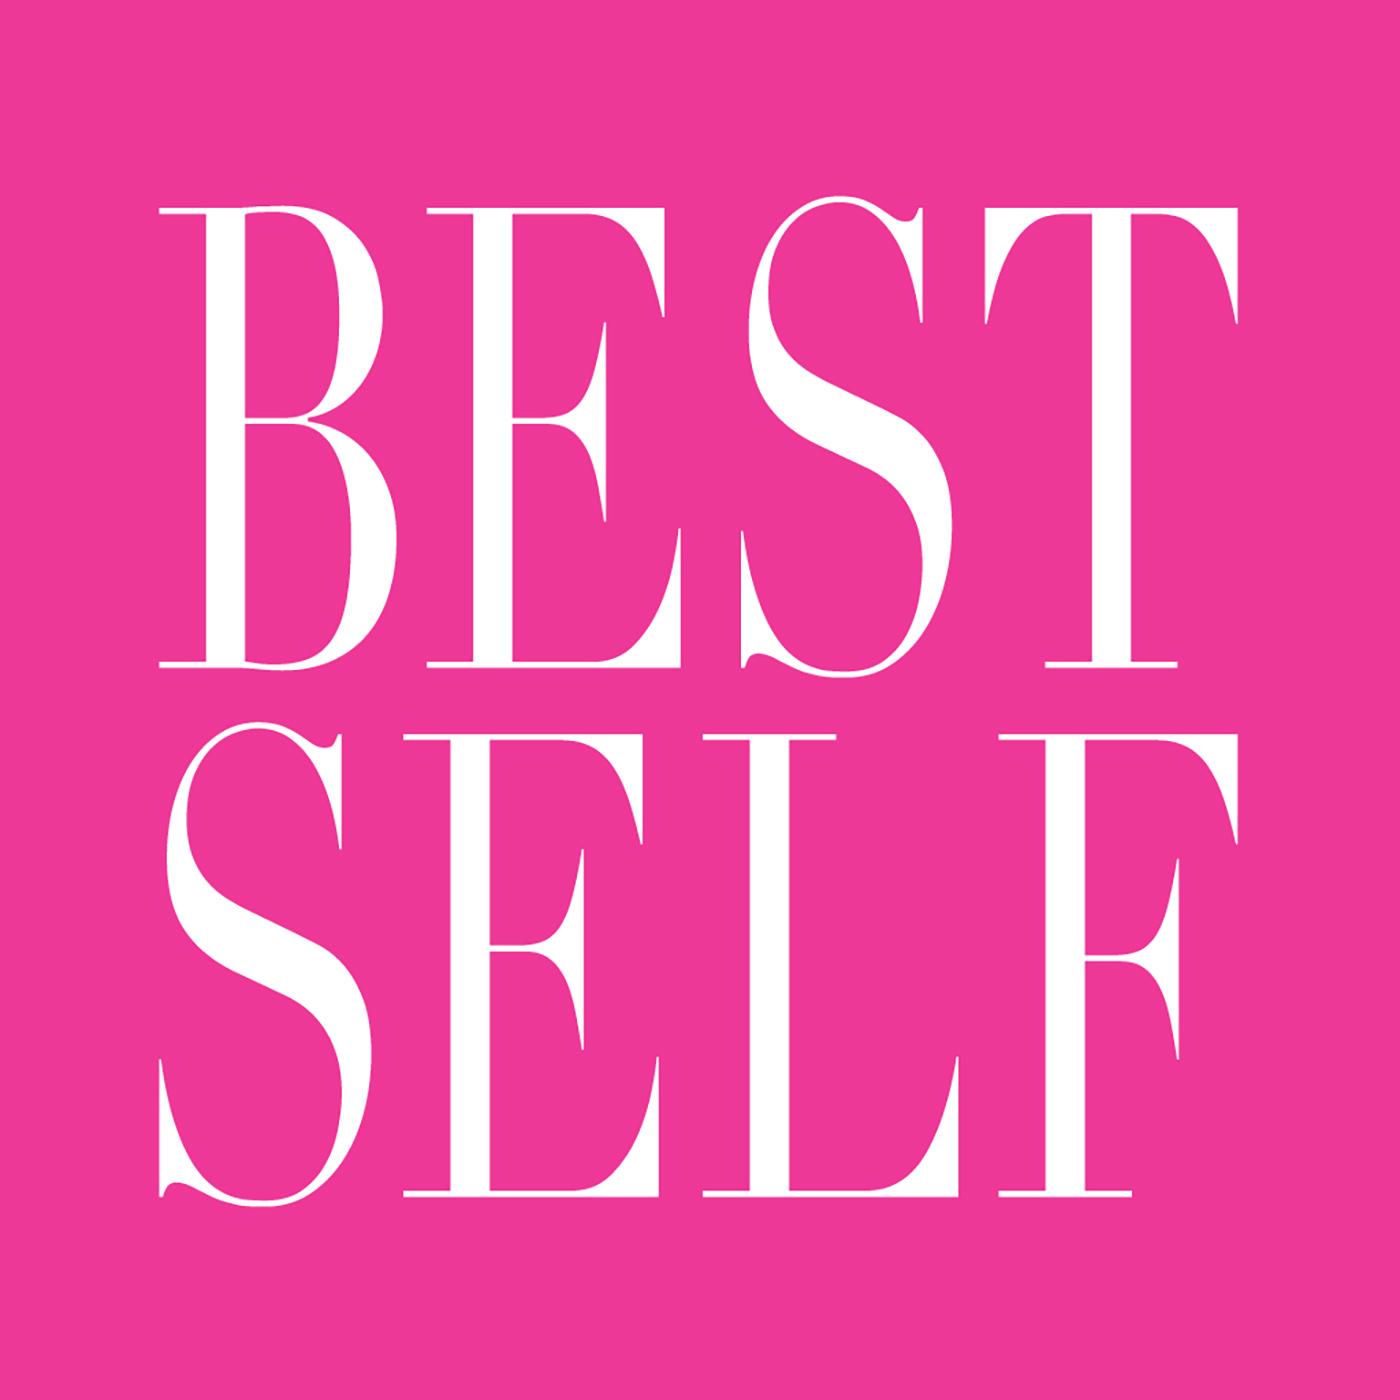 Self Magazine Logo - pod. fanatic. Podcast: BEST SELF MAGAZINE. The Leading Voice